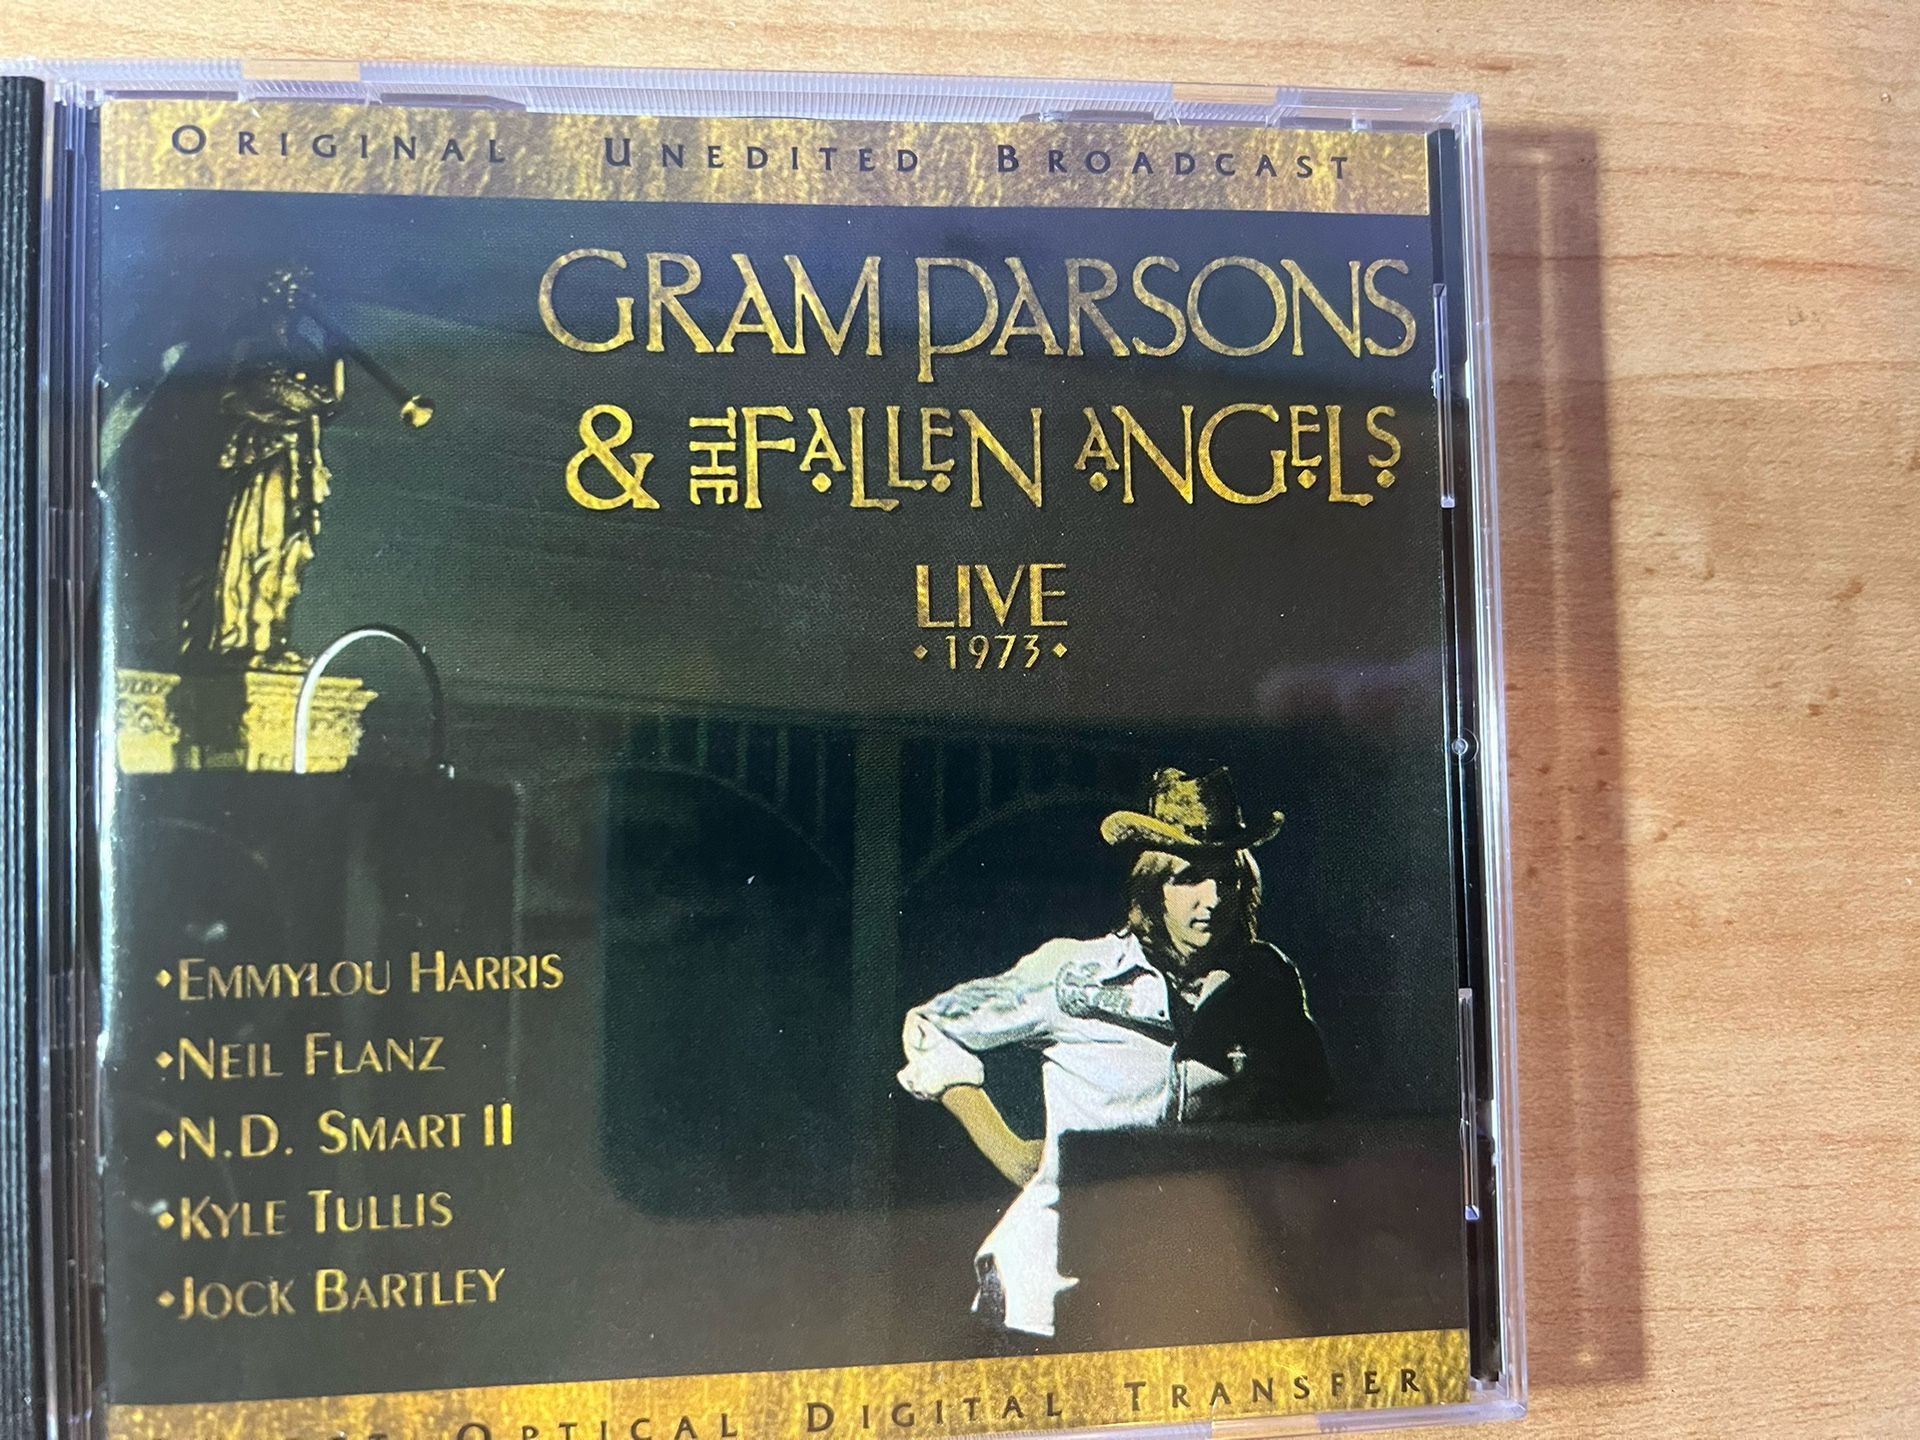 Gram Parsons & the Fallen Angels - Live 1973 - CD ** MINT ** 